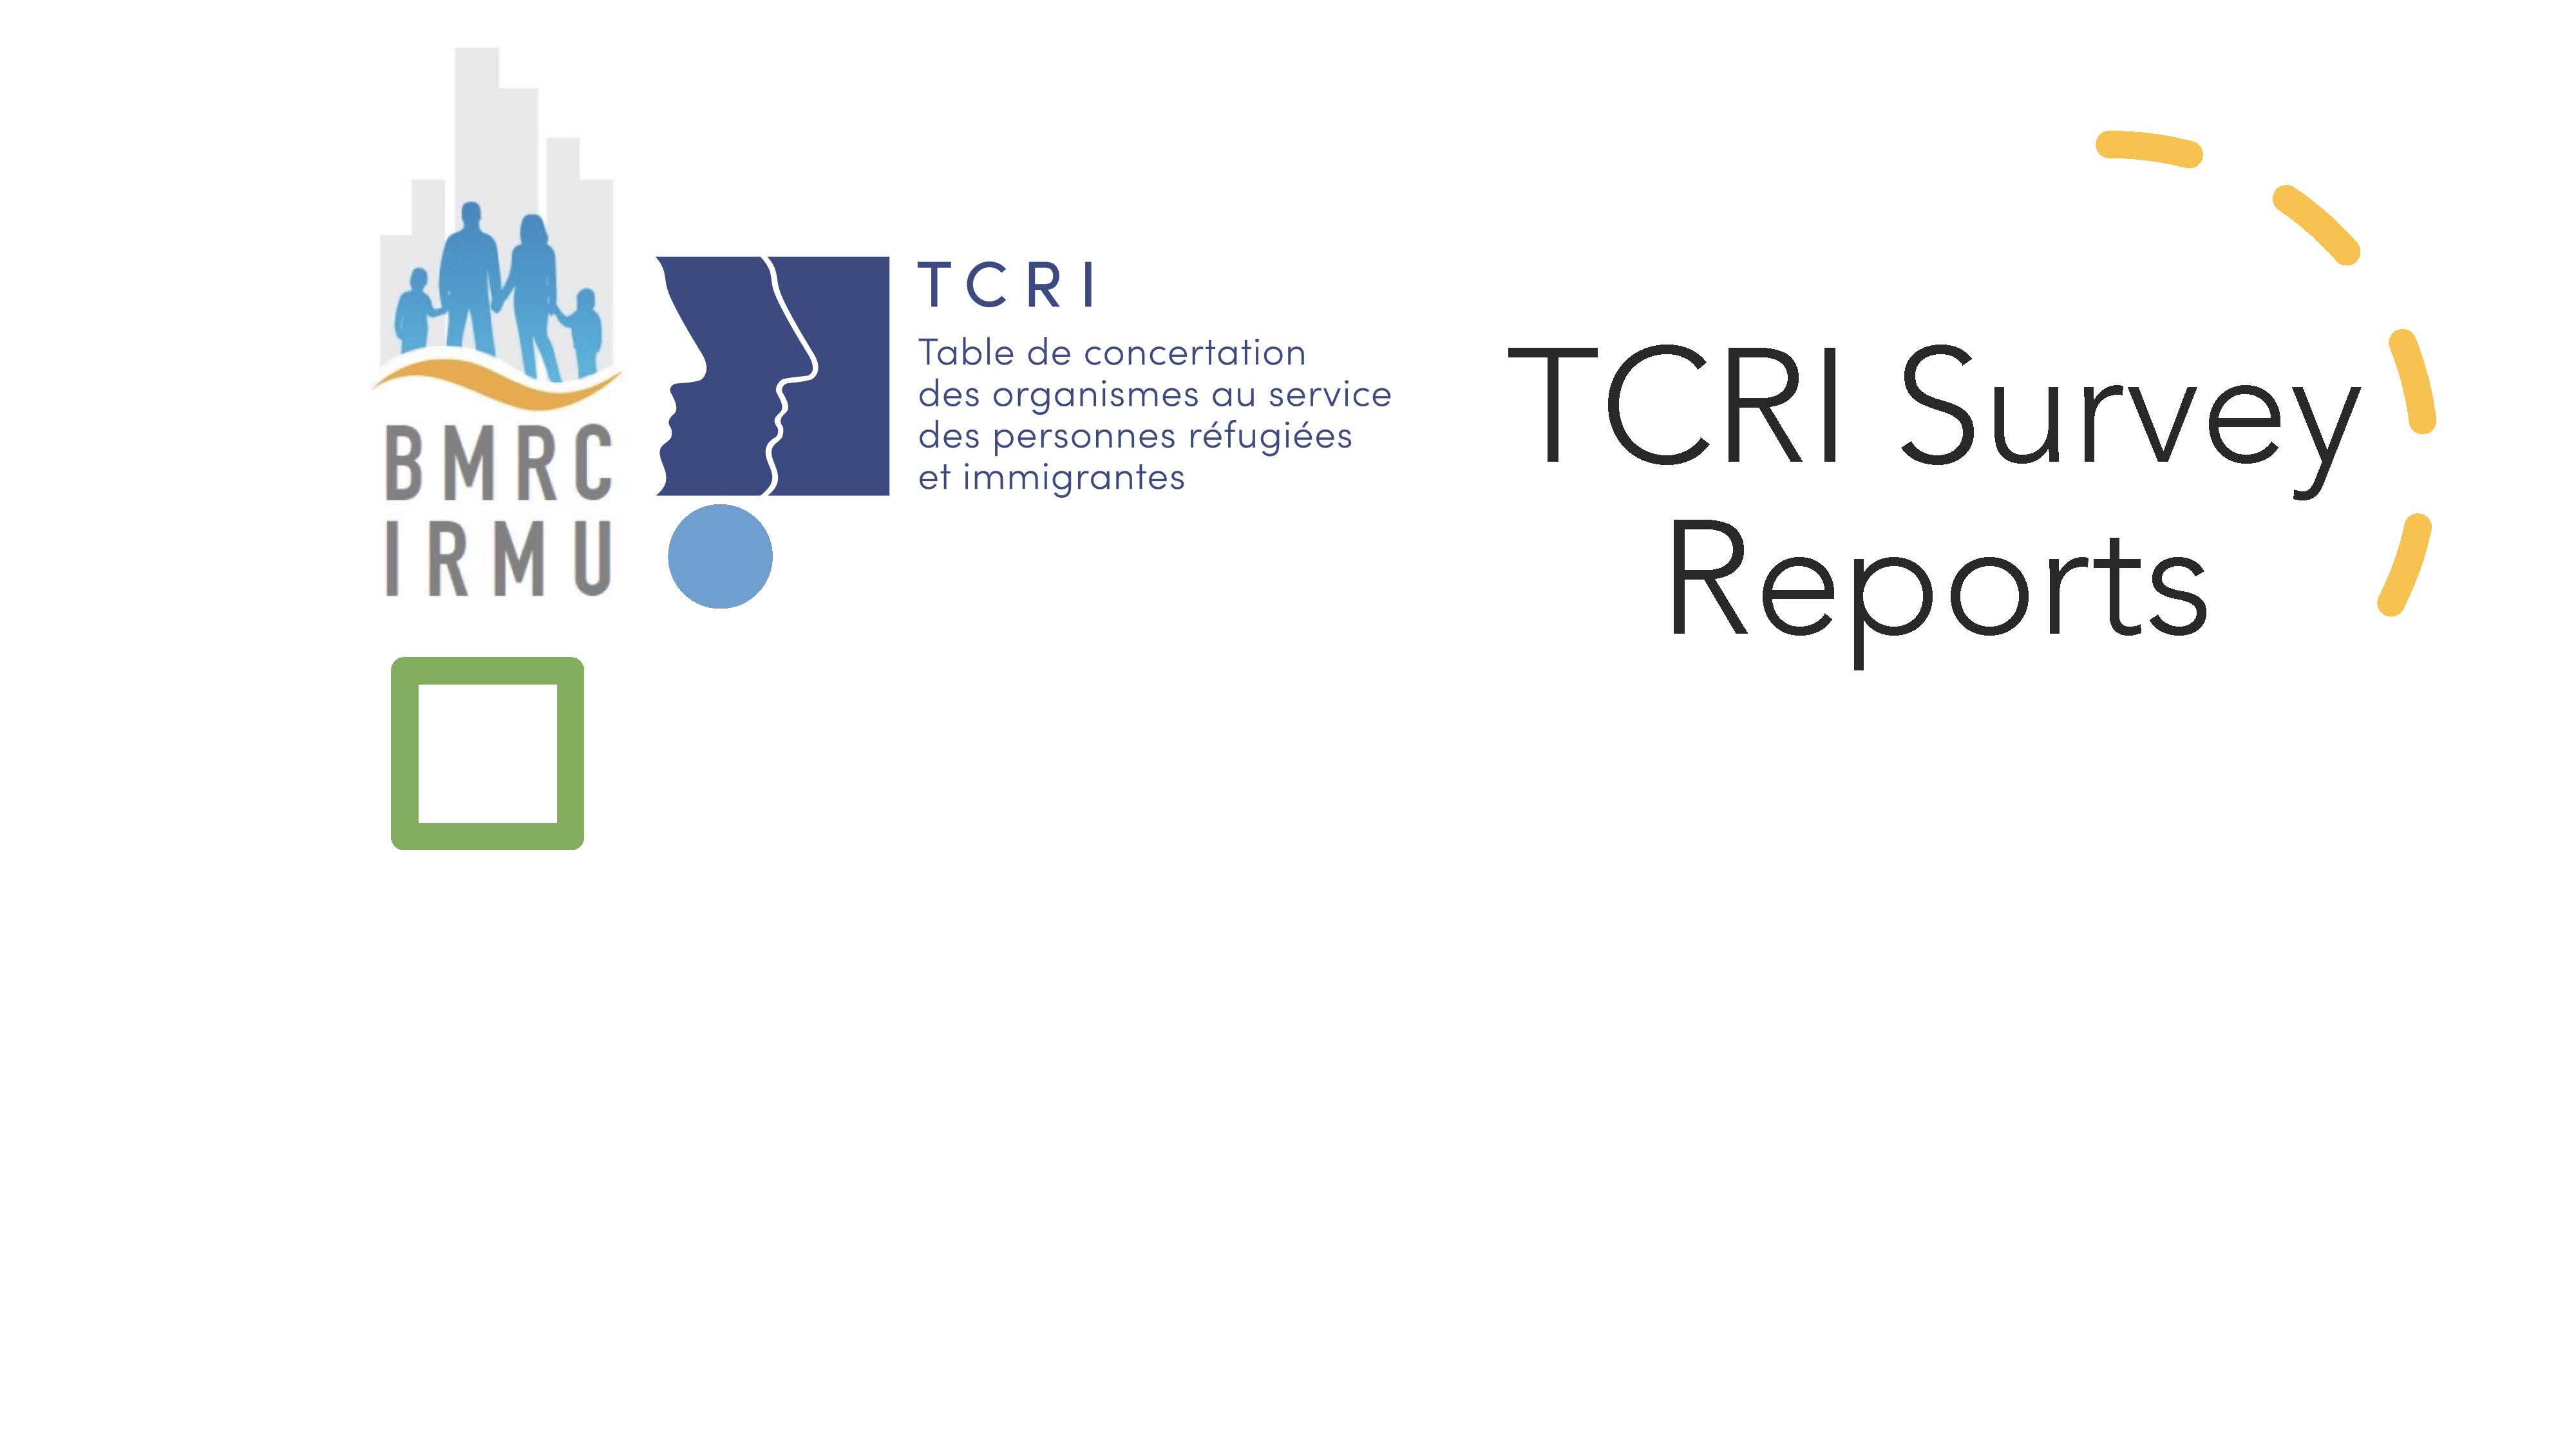 TCRI Survey Reports